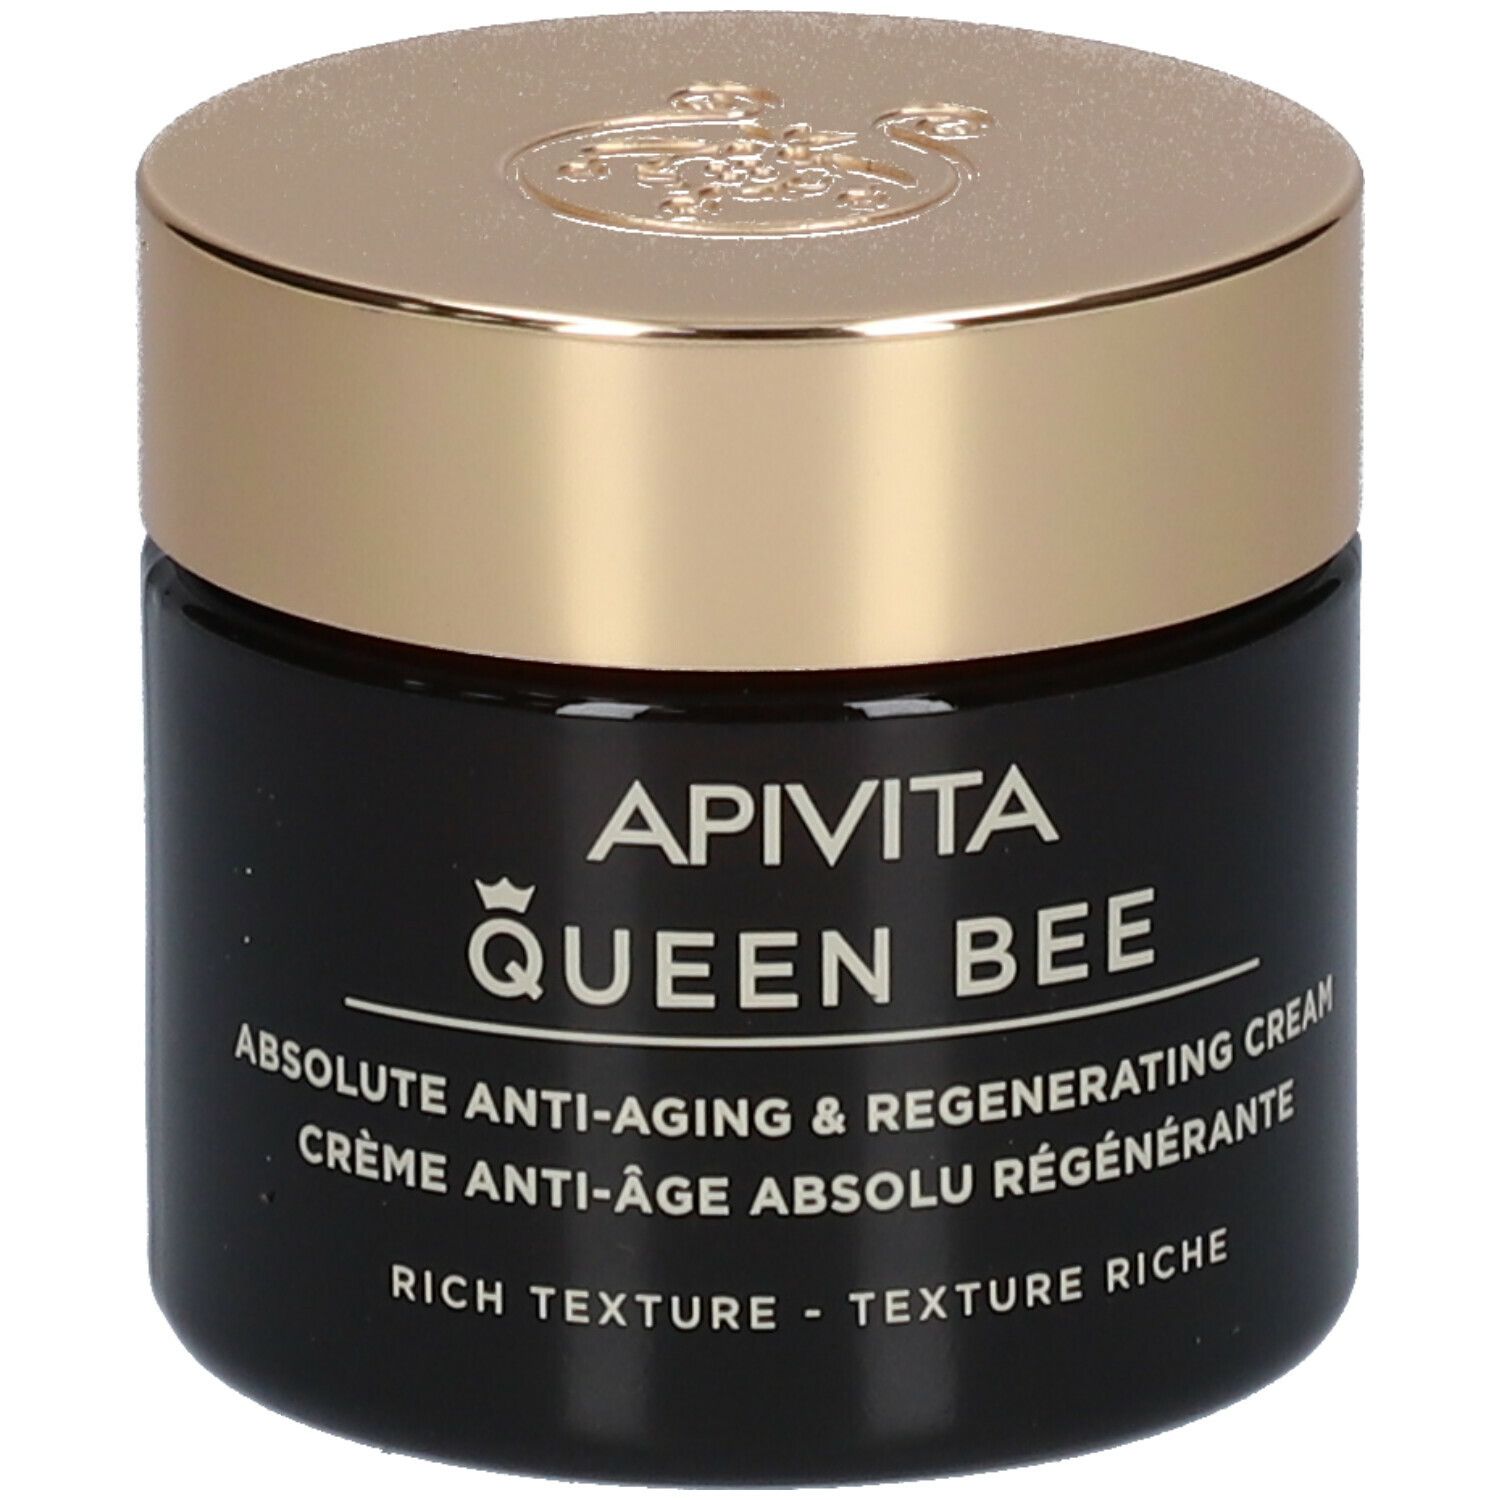 Apivita Queen BEE Crème Anti-Âge Absolu Régénérante - Texture Riche